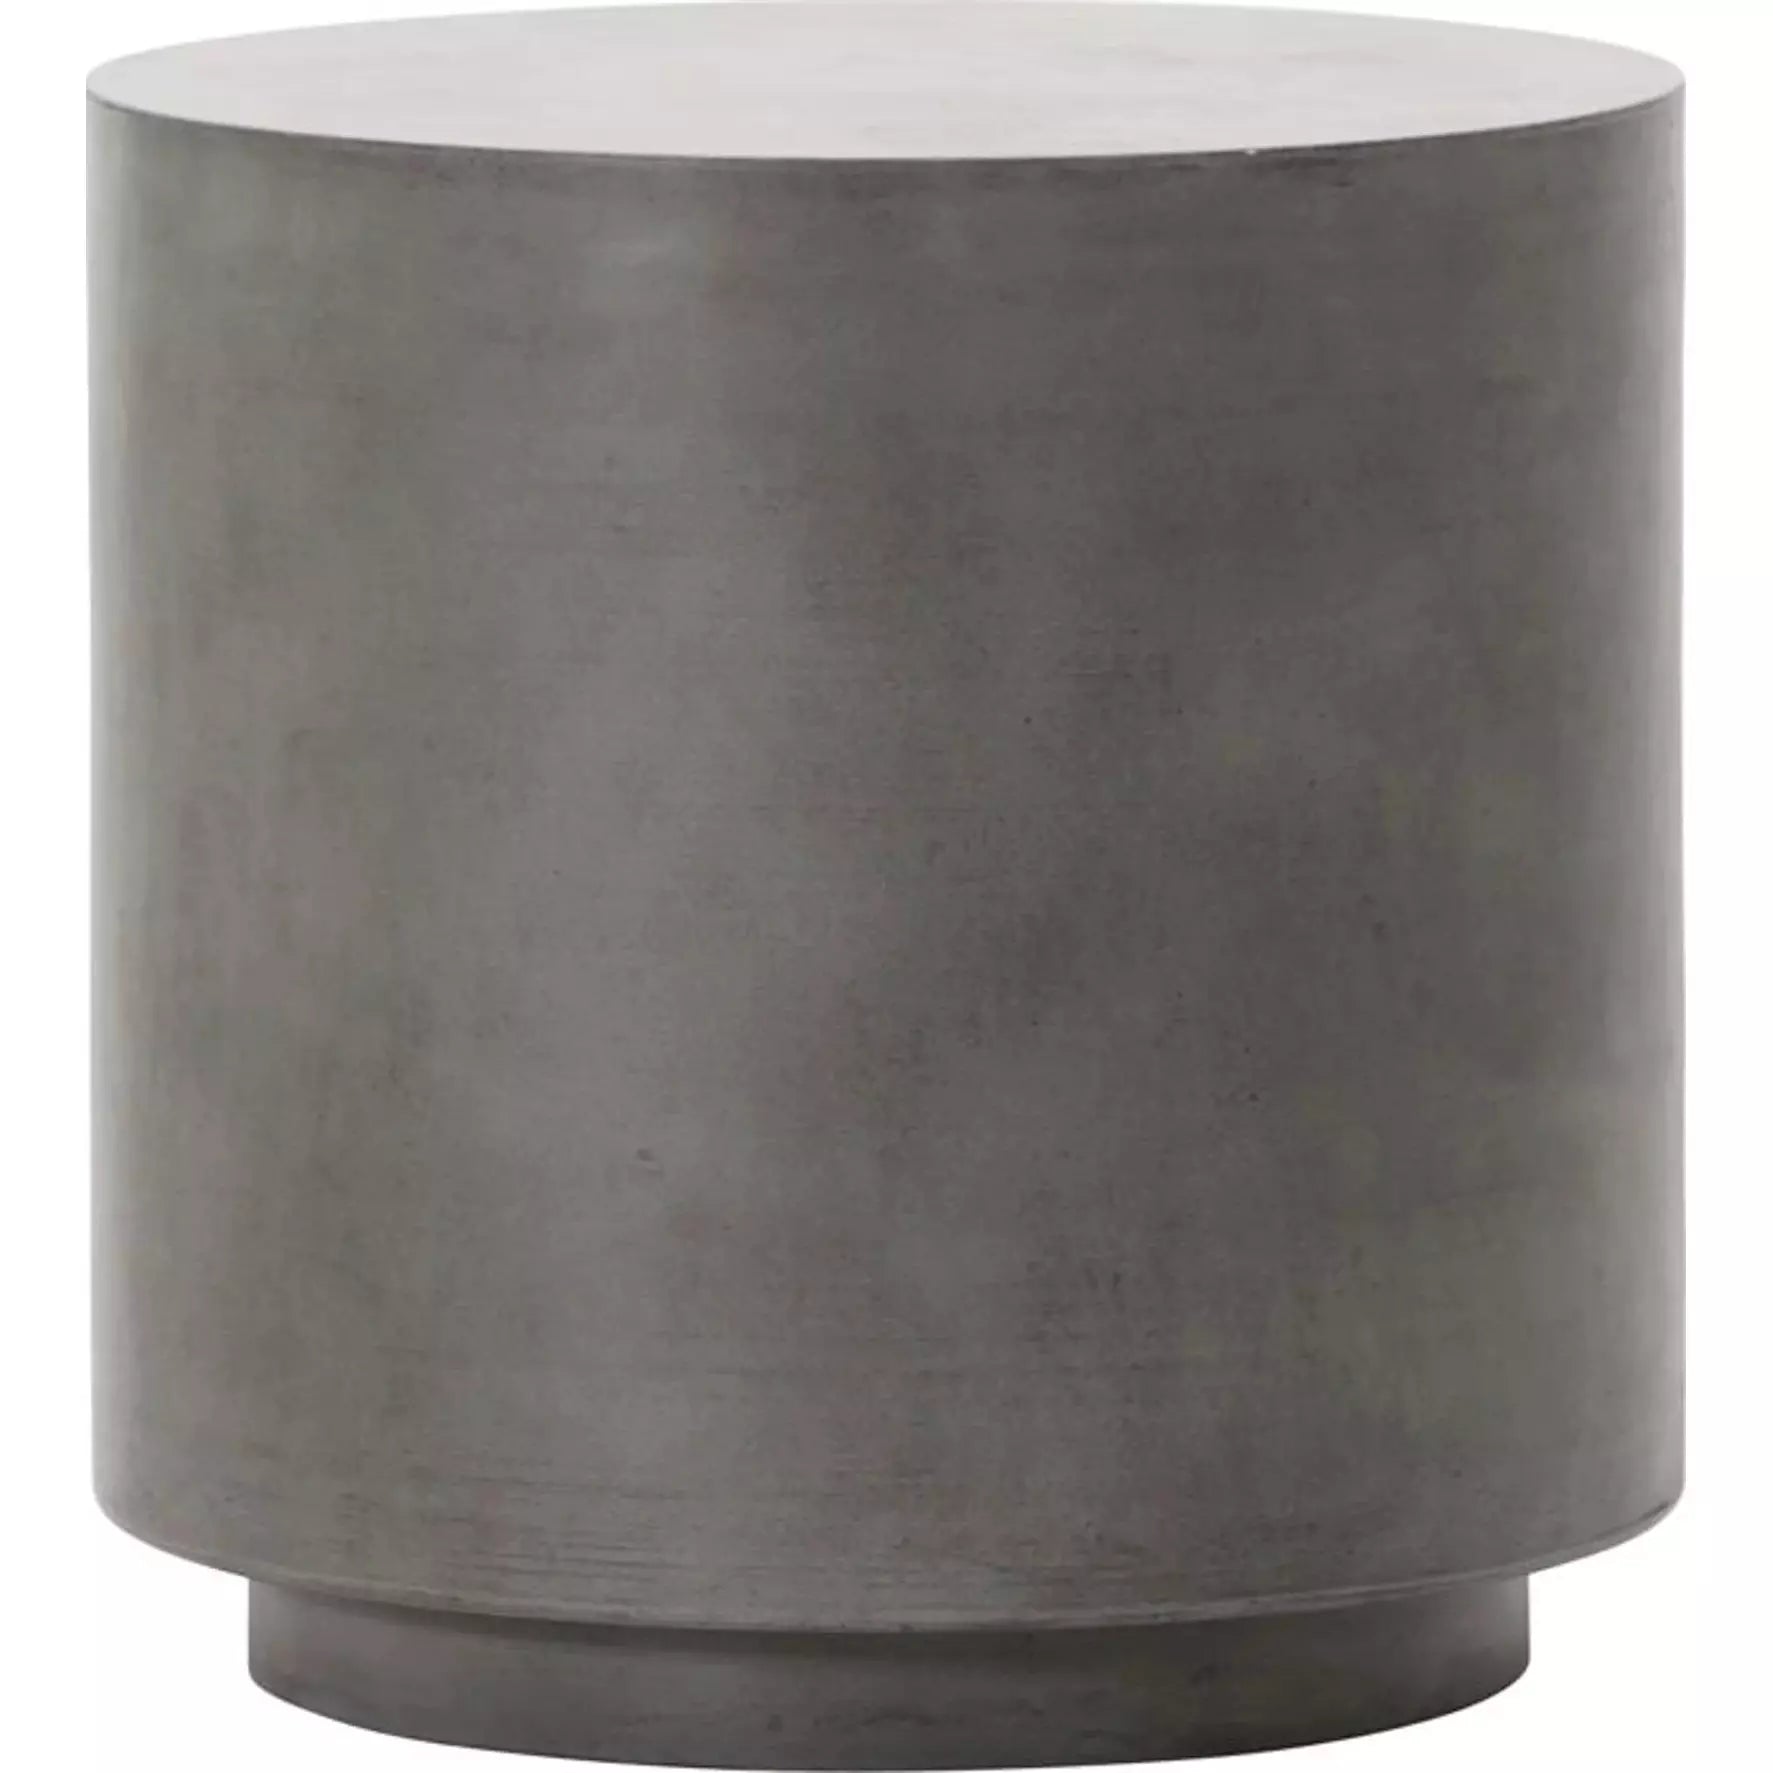 Huslege betongbord - bord, femti 50x50 cm